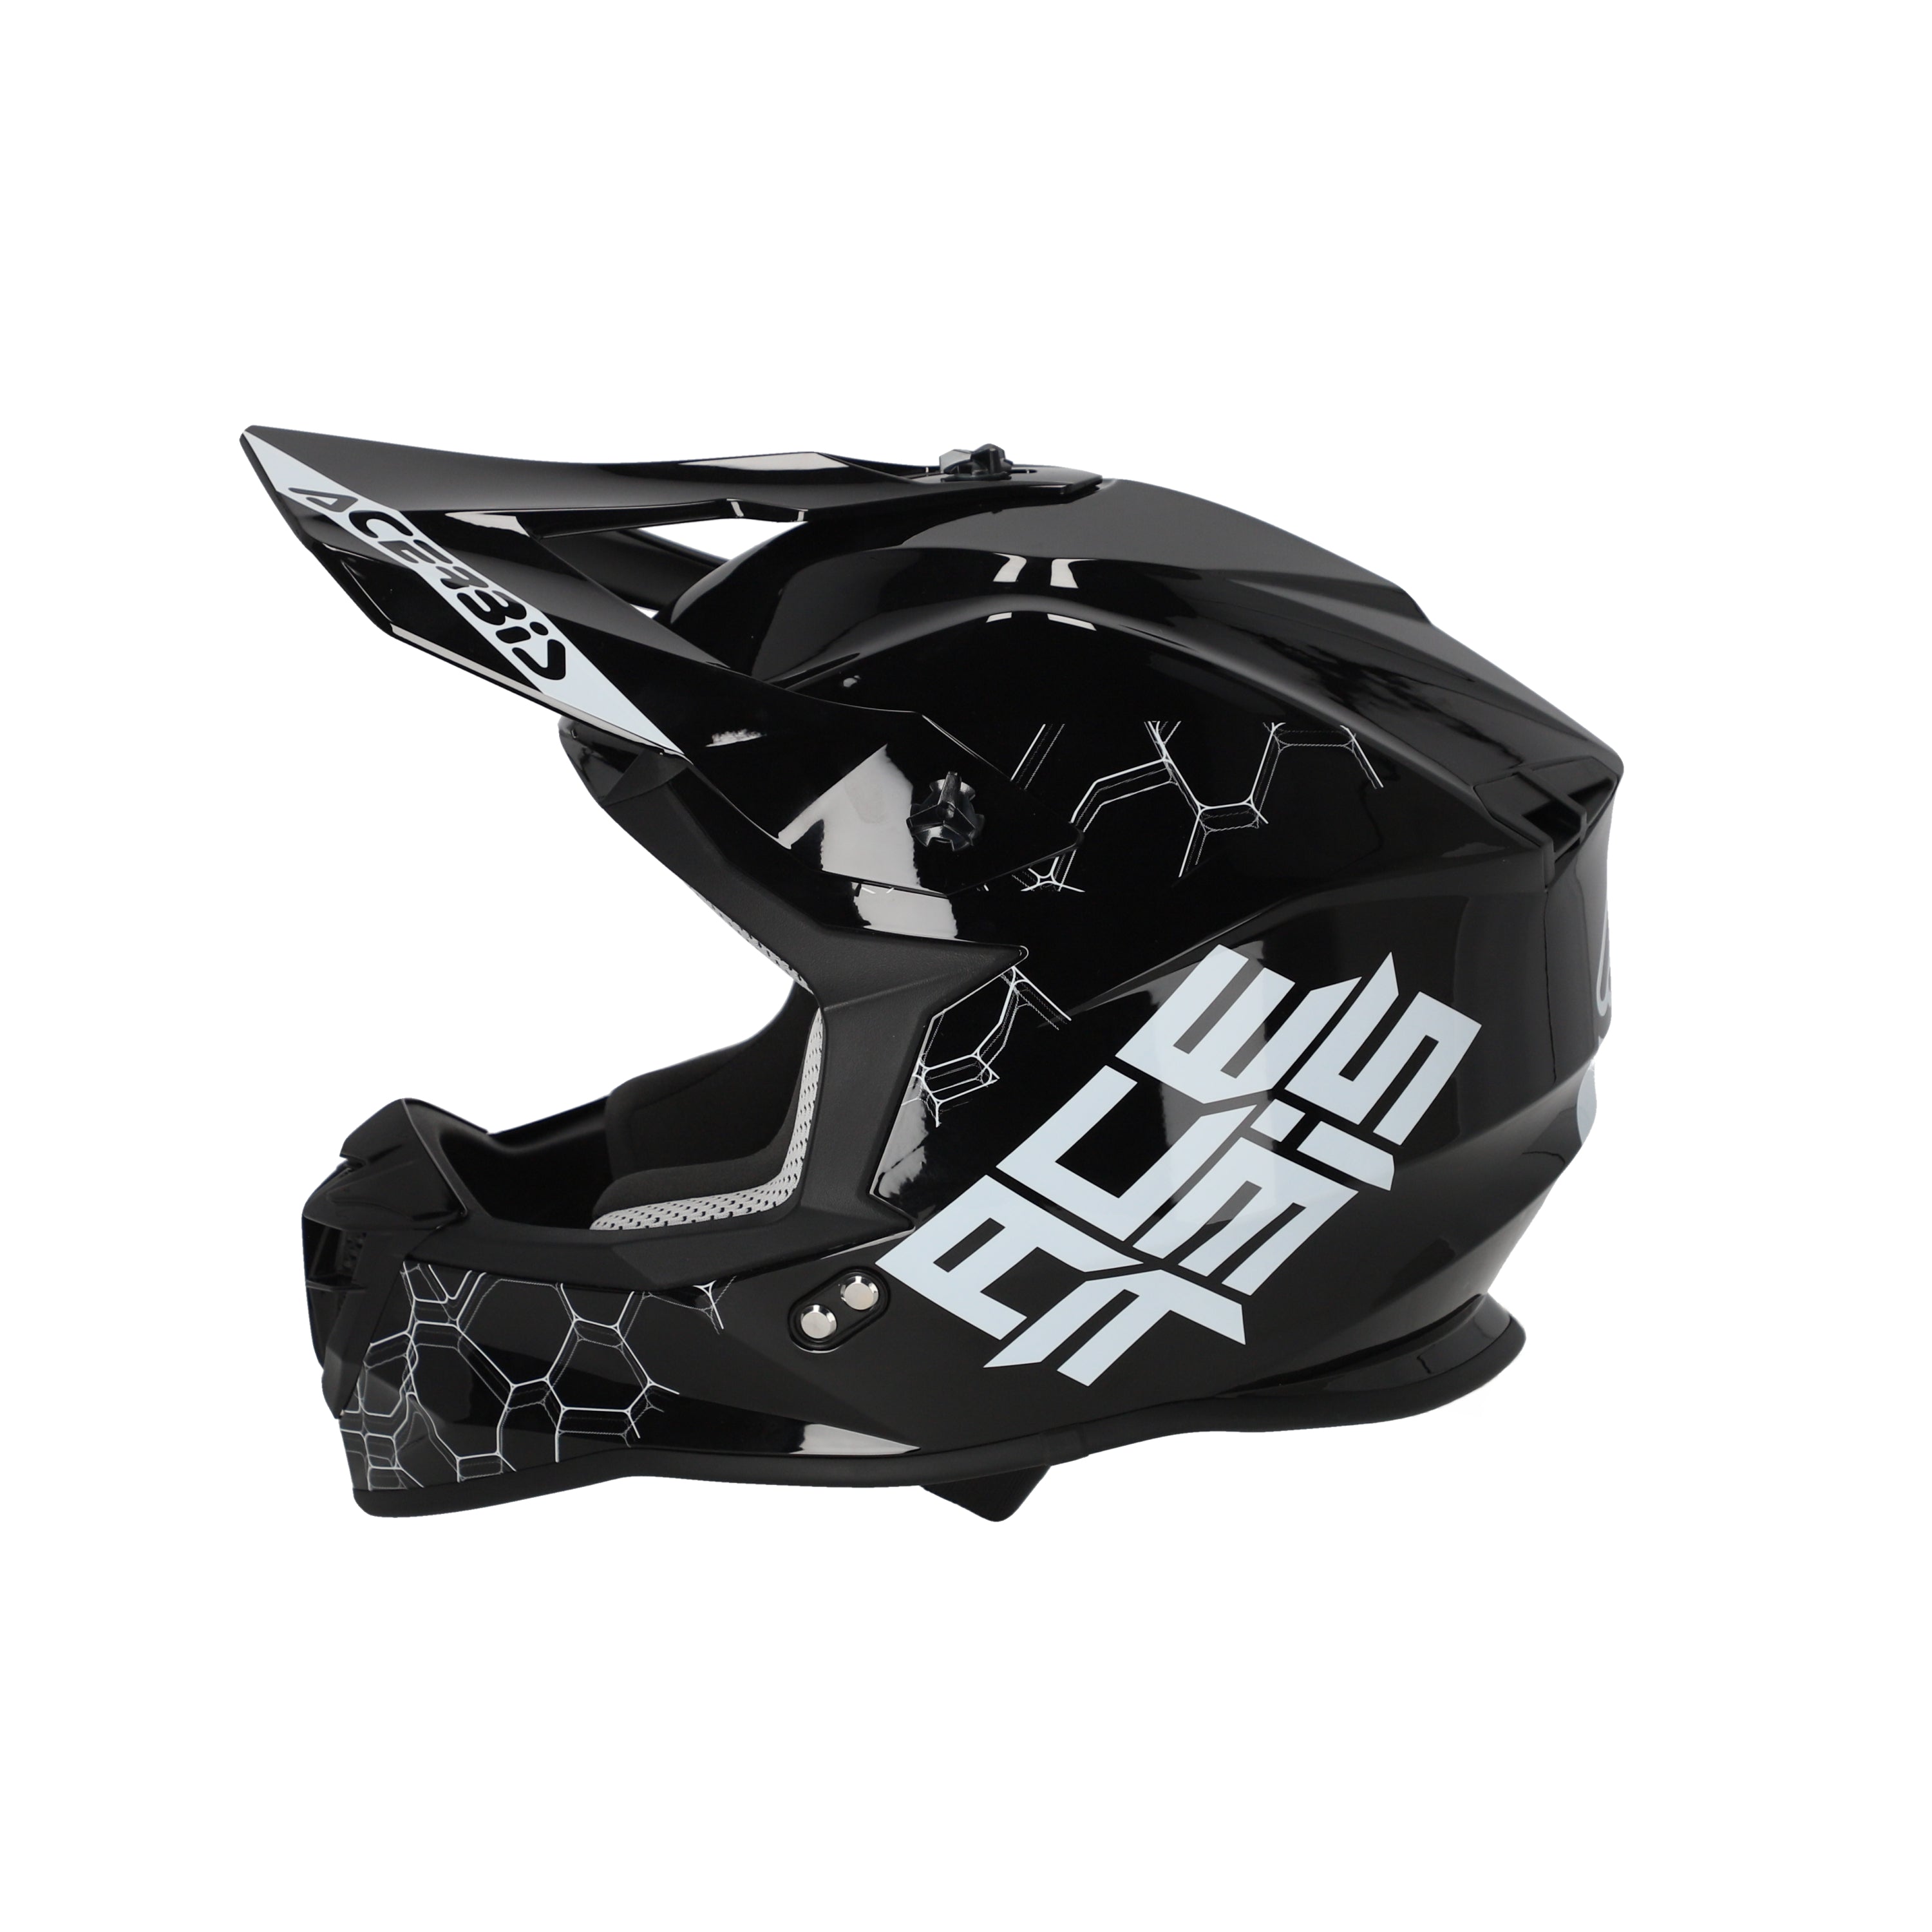 Acerbis Linear Solid MX Helmet Glossy Black